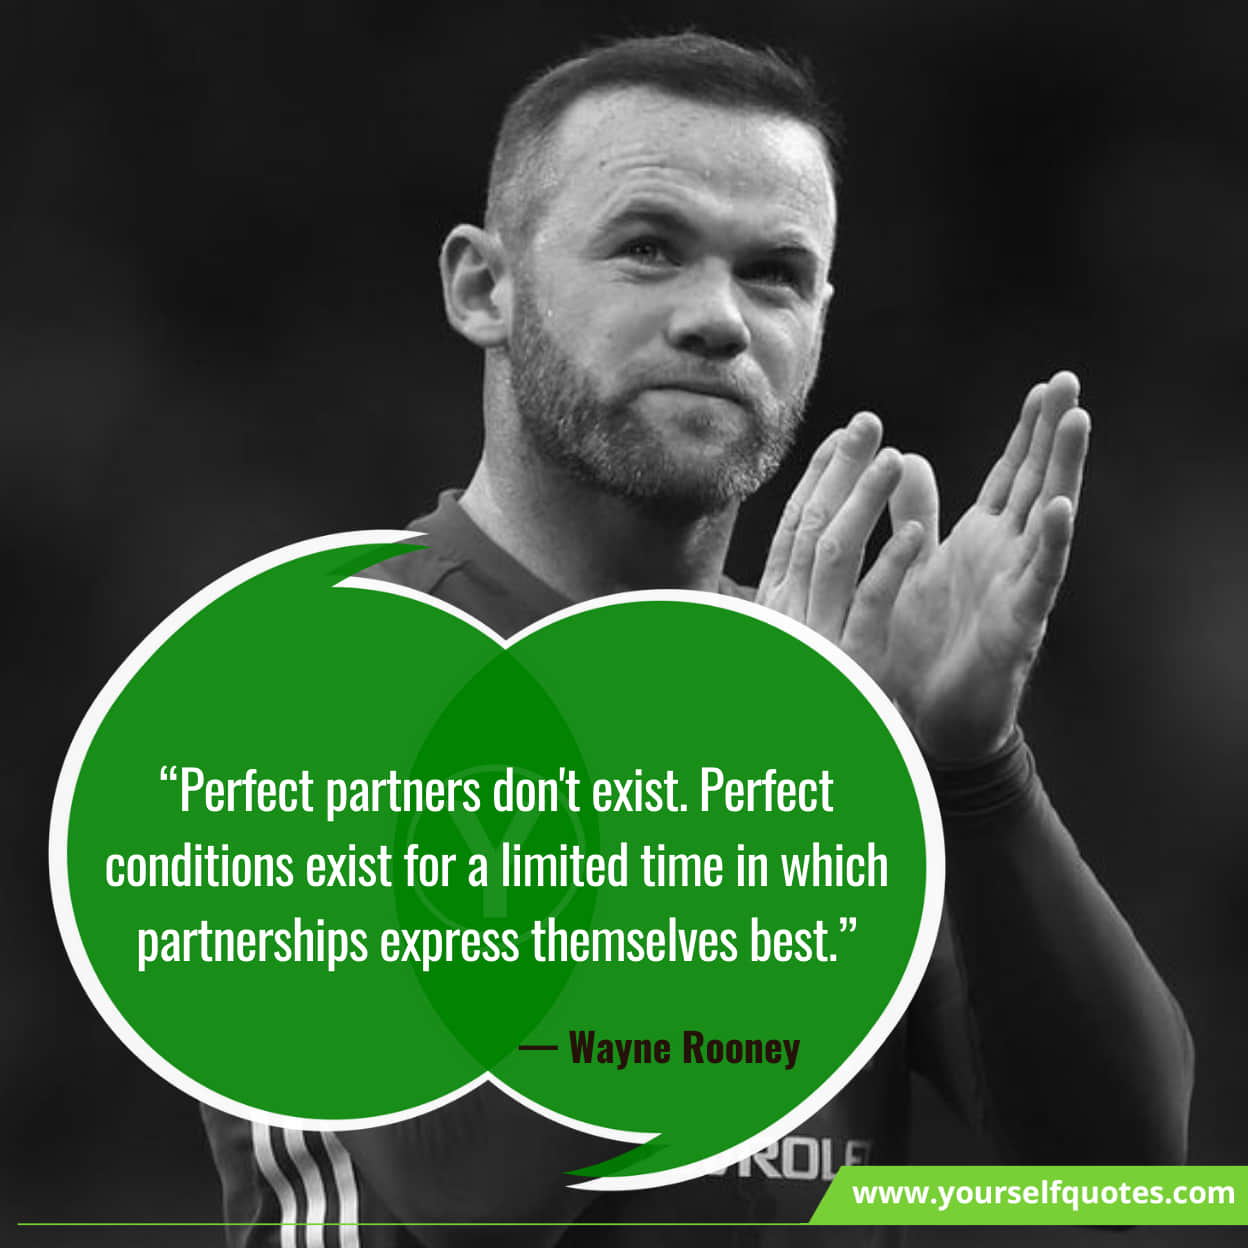 Wayne Rooney Quotes On Love